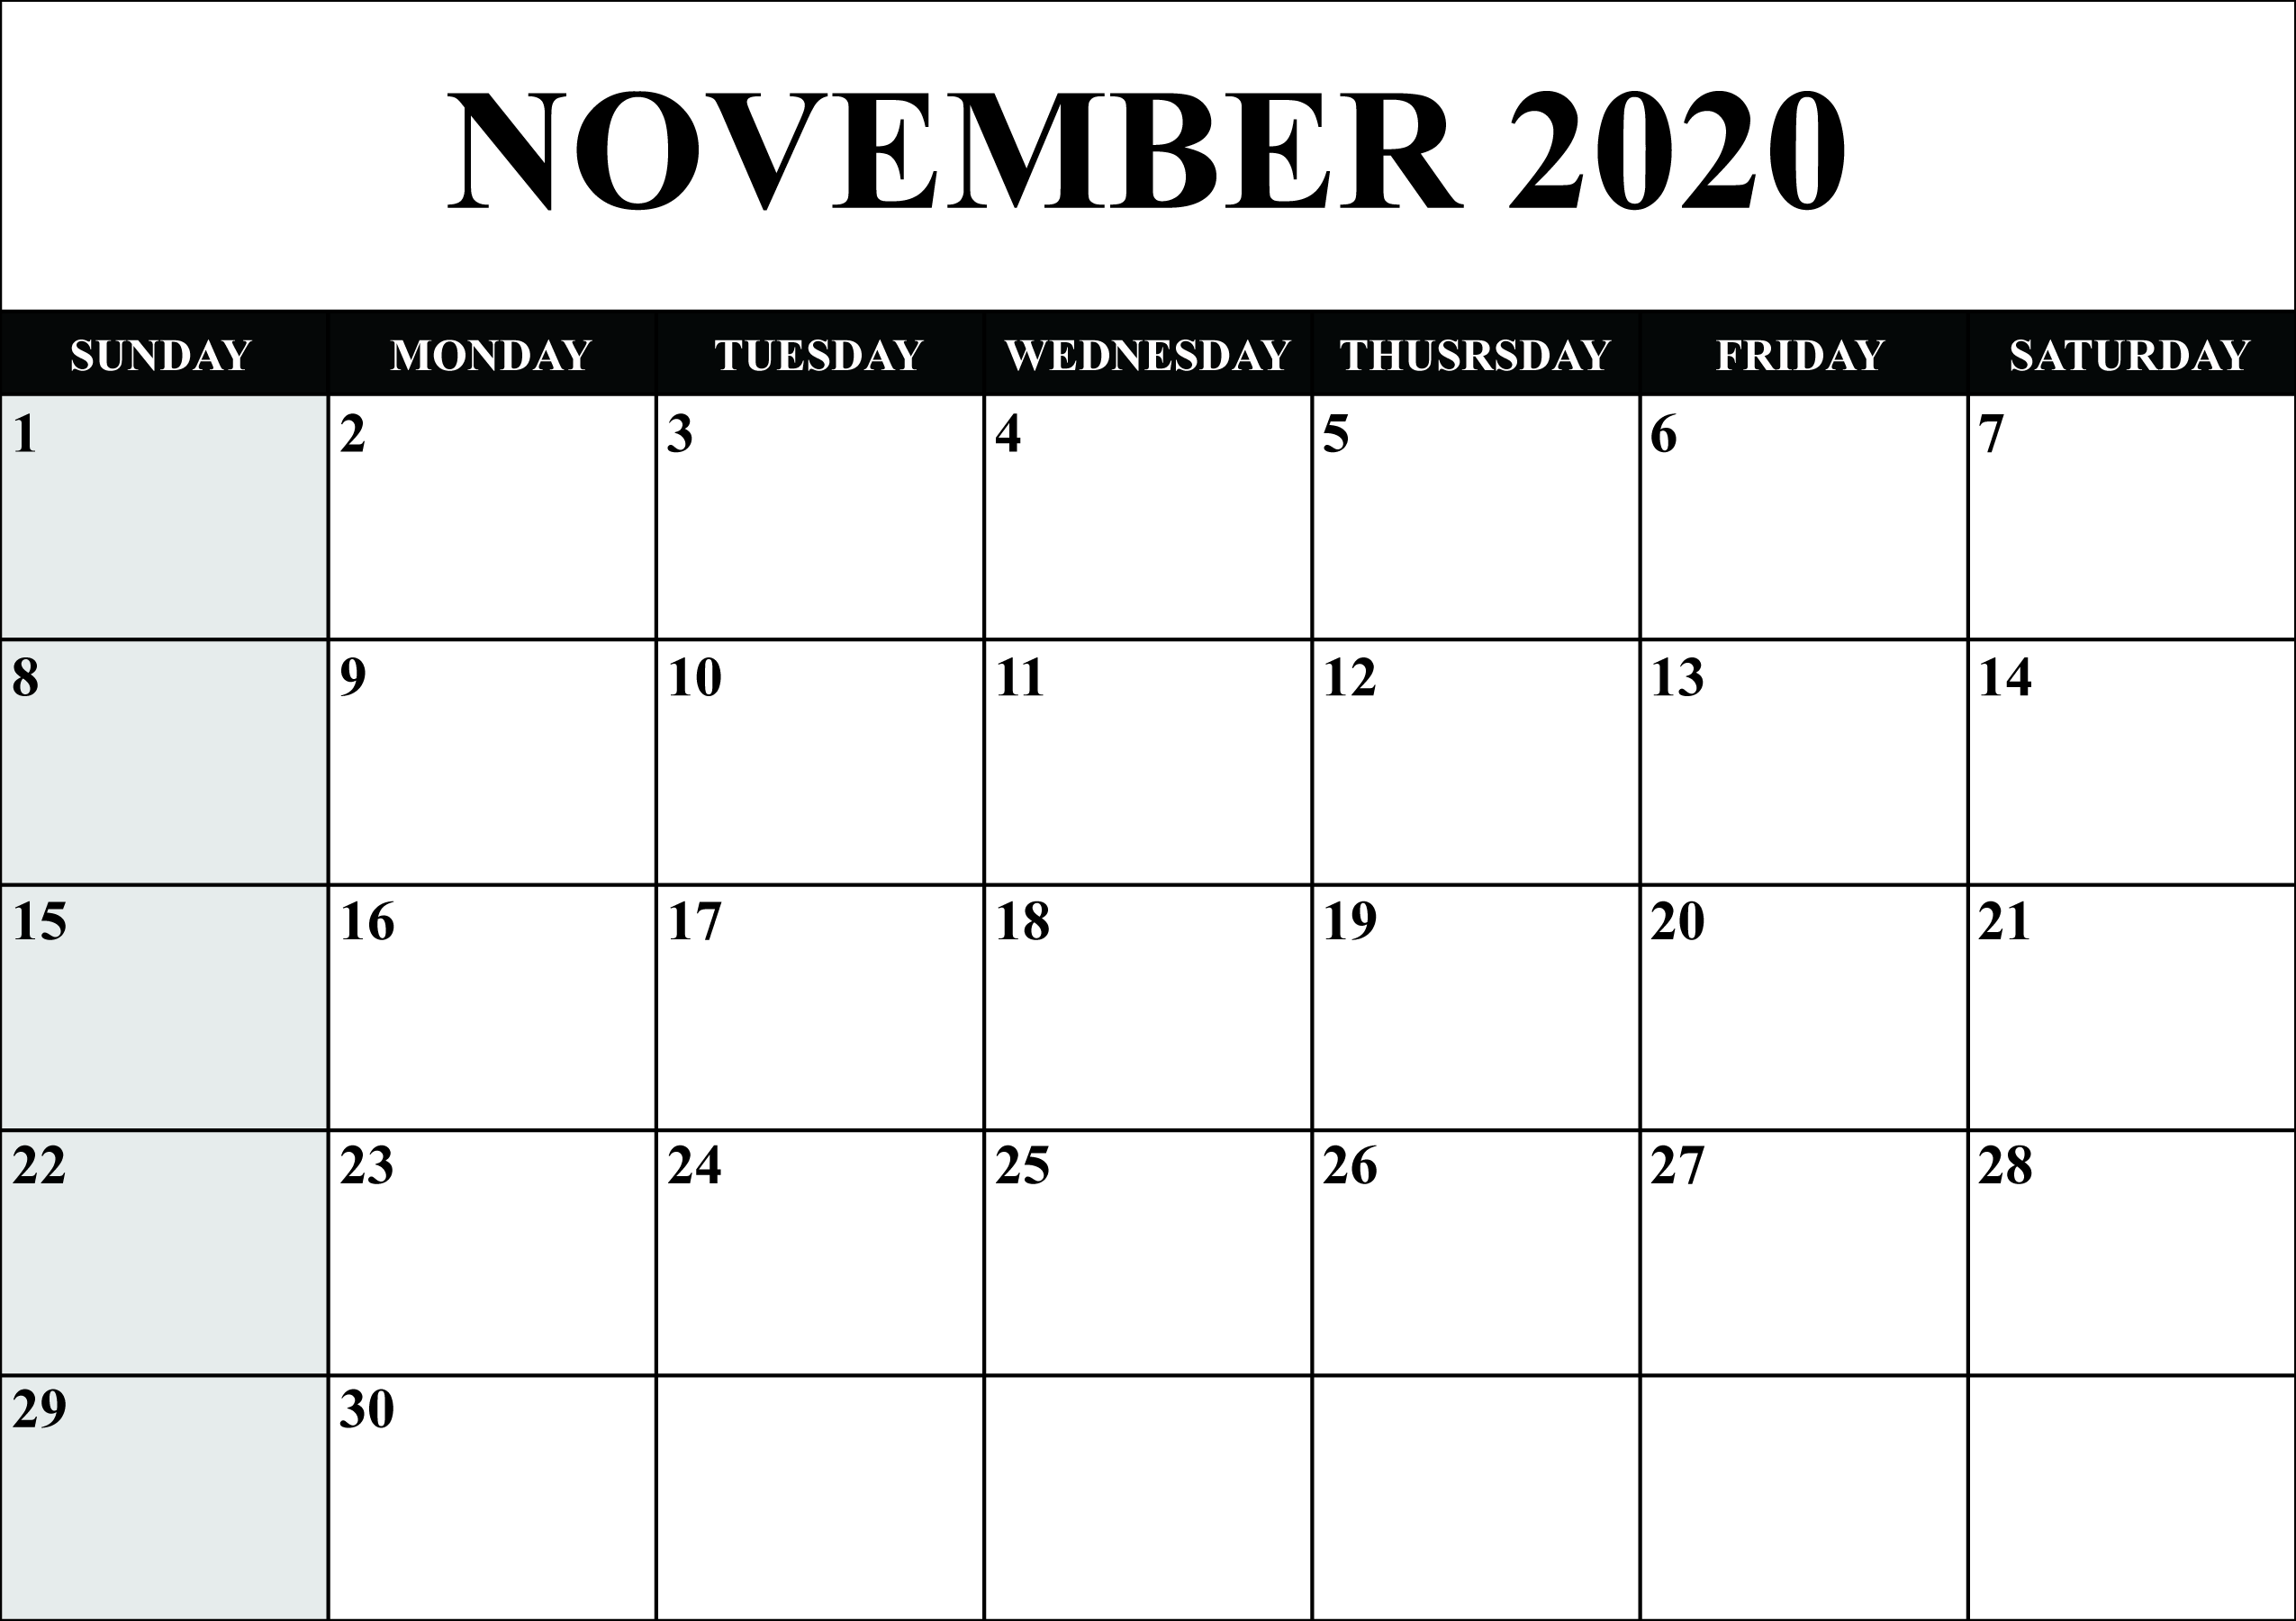 November 2020 Calendar Template Word